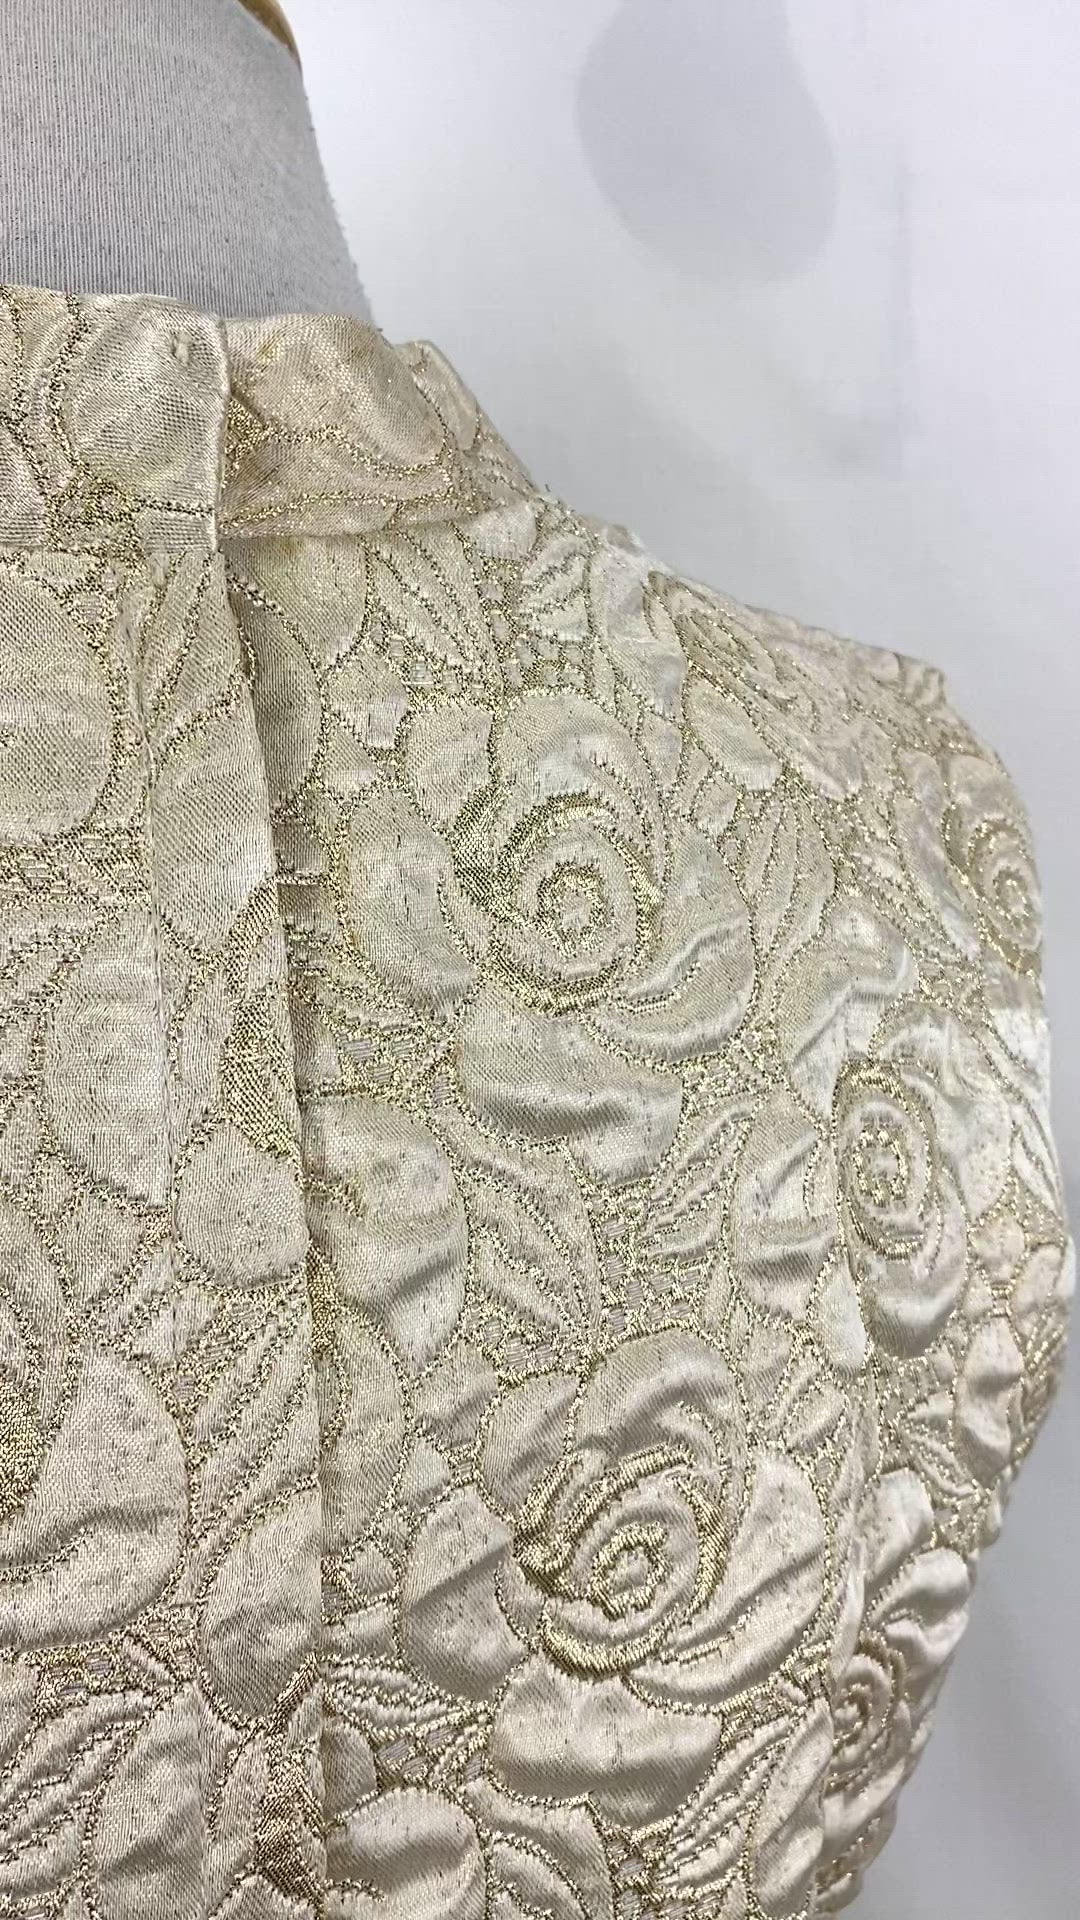 Vintage 1950s Metallic Gold Satin & Lurex Quilted Floral Dress, Medium 